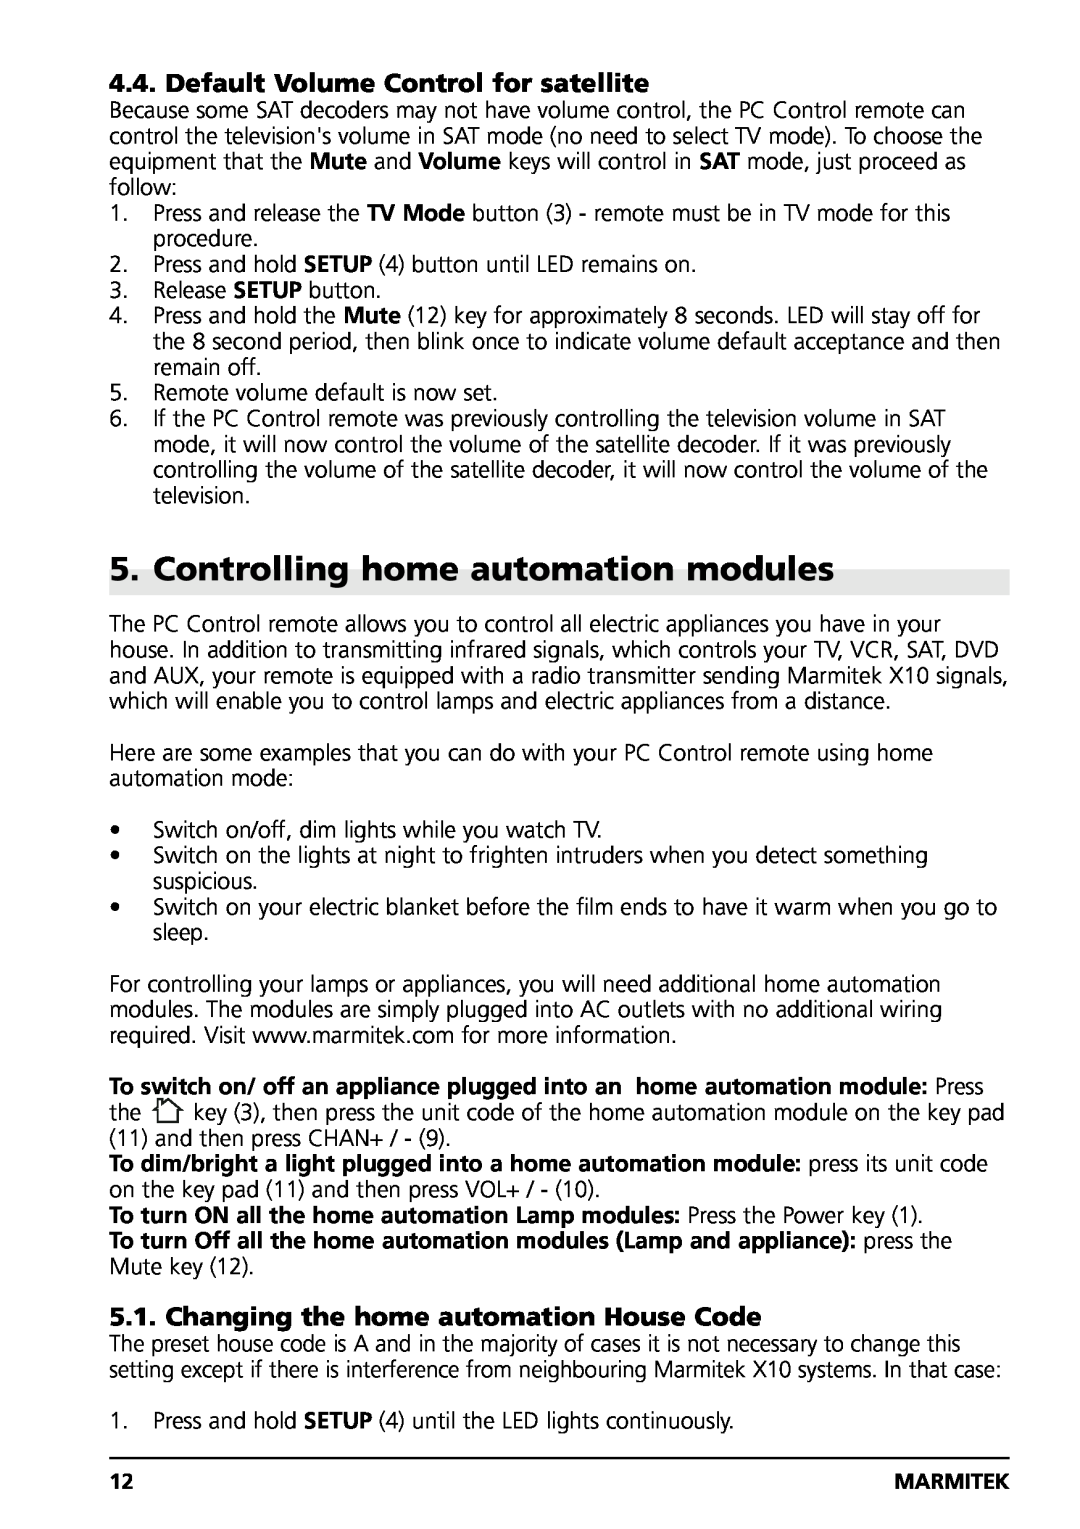 Marmitek PC CONTROL owner manual Controlling home automation modules, Default Volume Control for satellite 